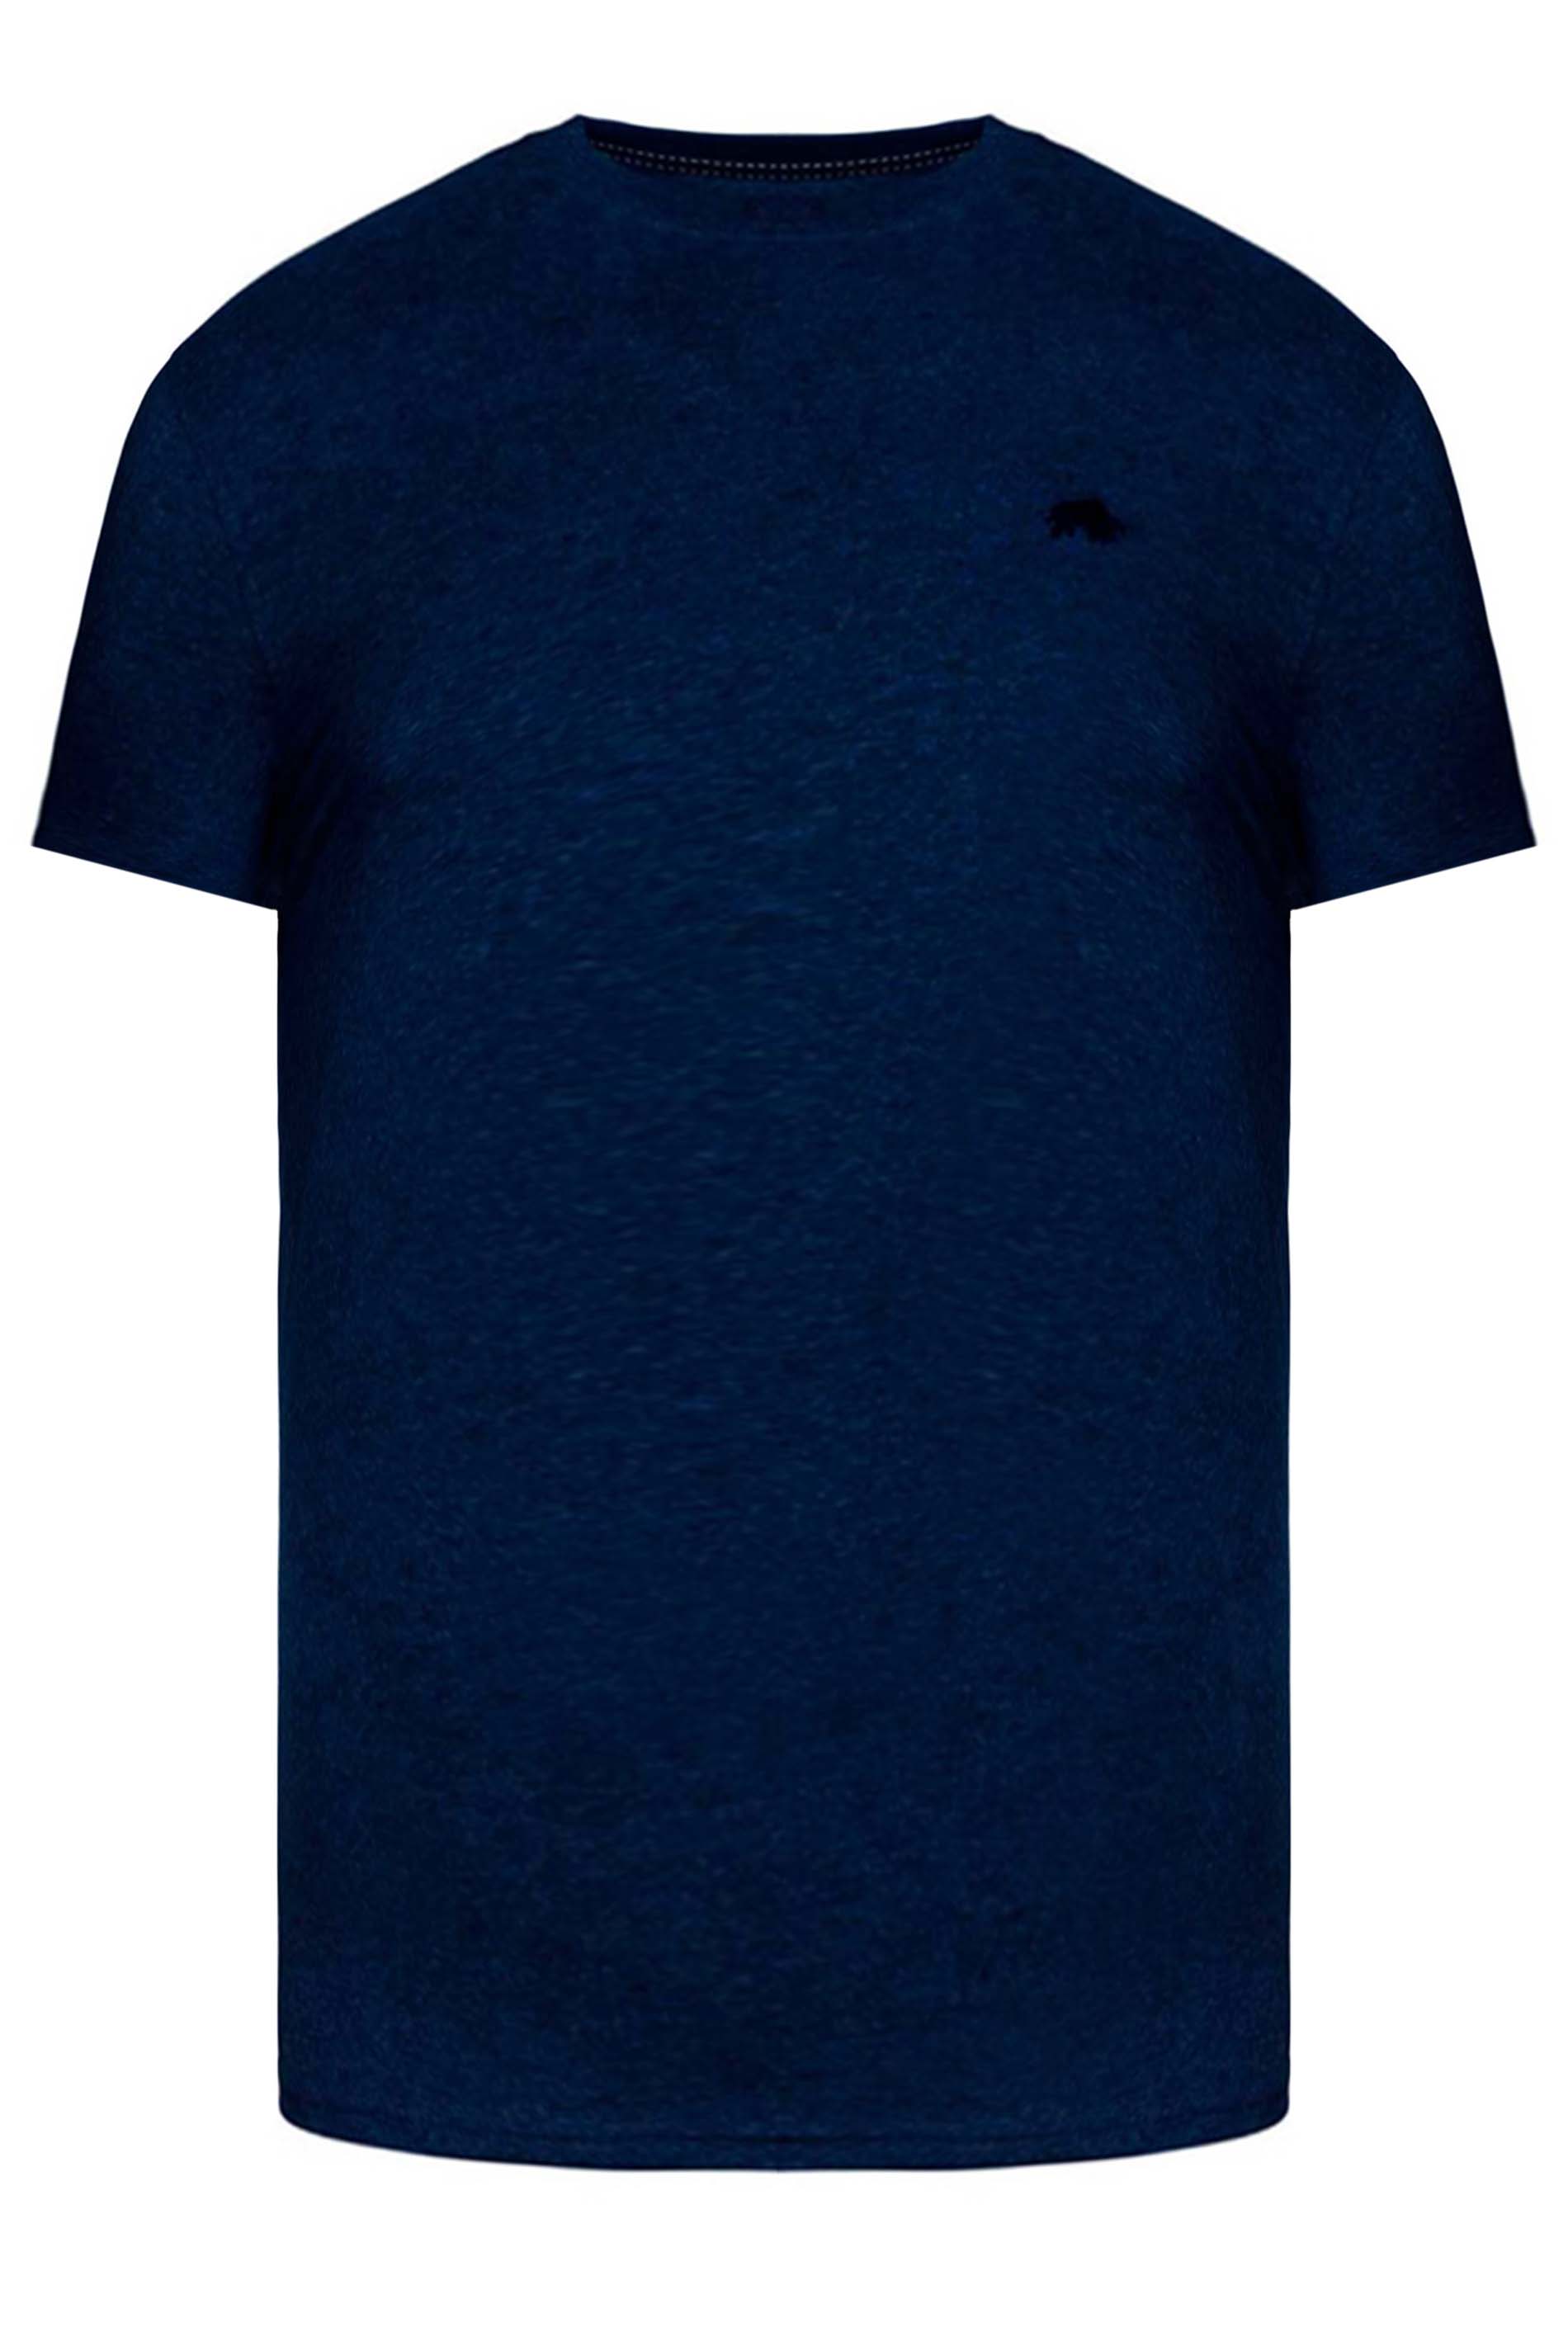 RAGING BULL Navy Blue Signature T-Shirt 3